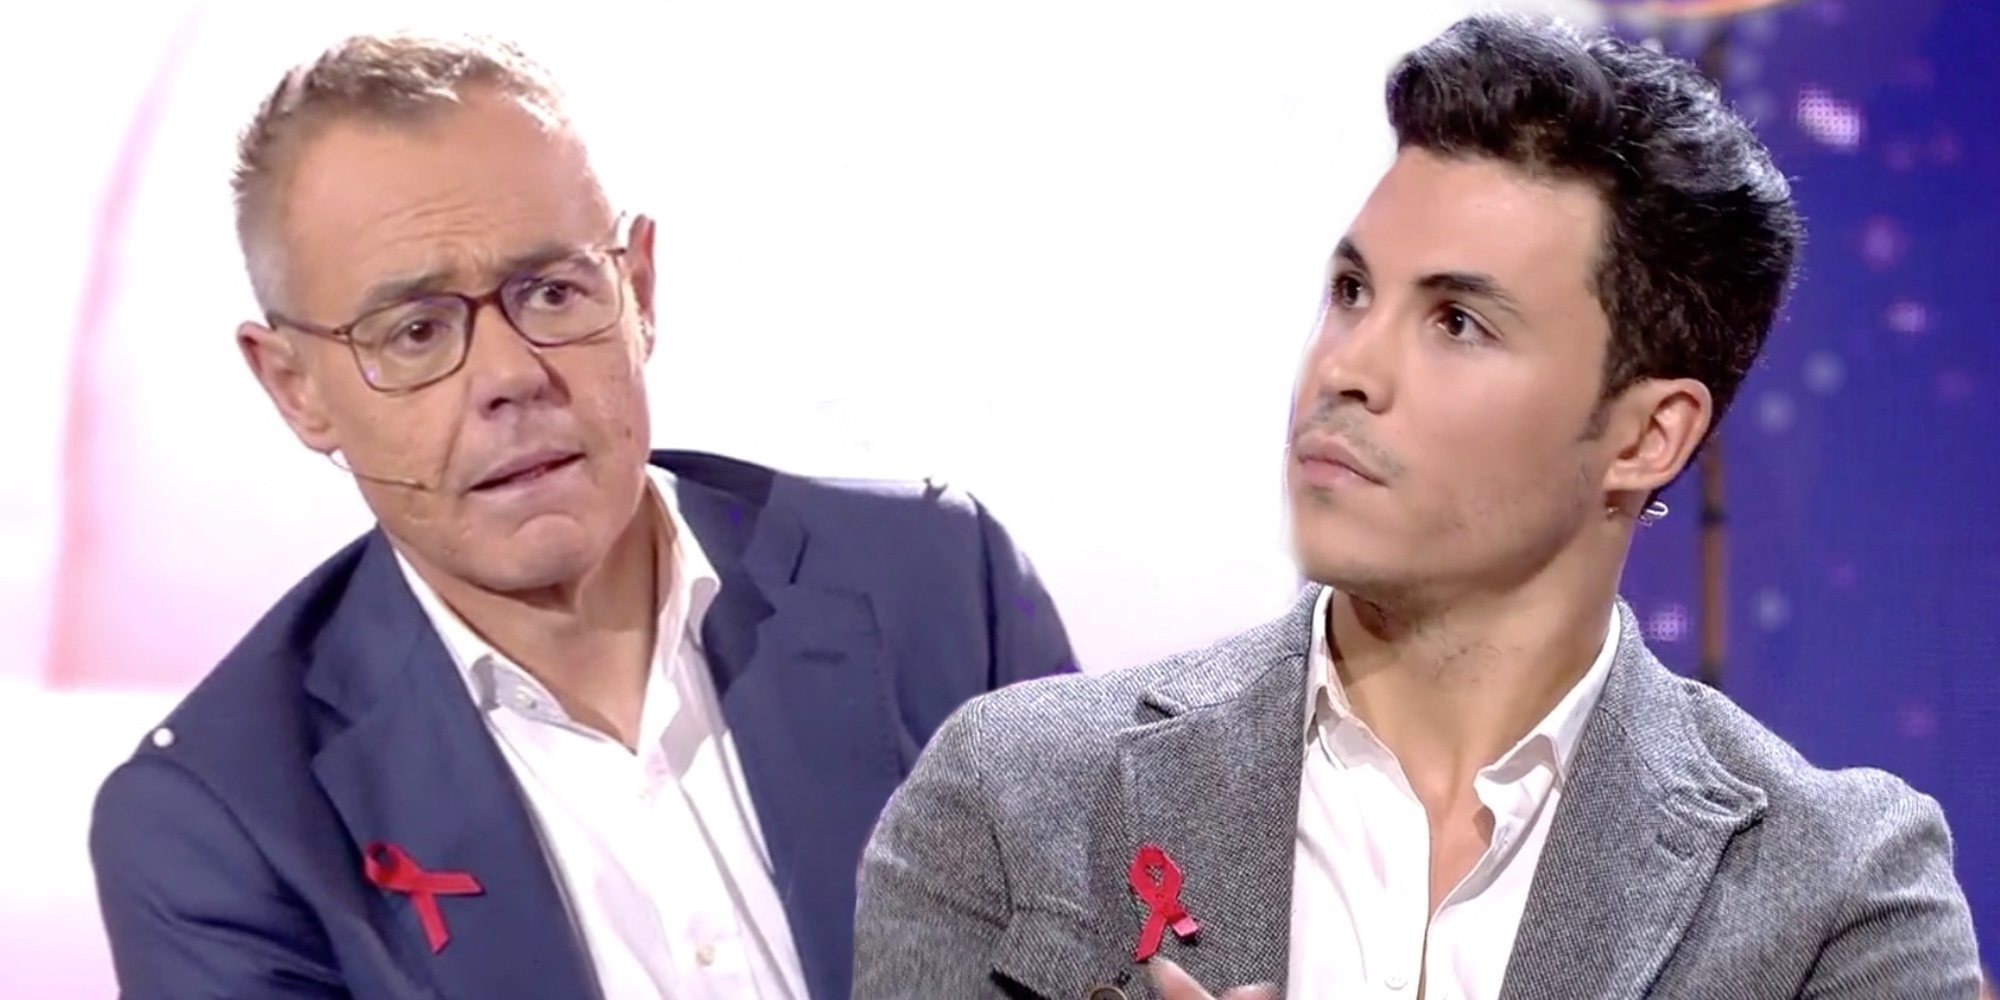 El enfado de Jordi González con Kiko Jiménez en 'GH VIP 7': "La estrellitis enfermiza me parece fatal"